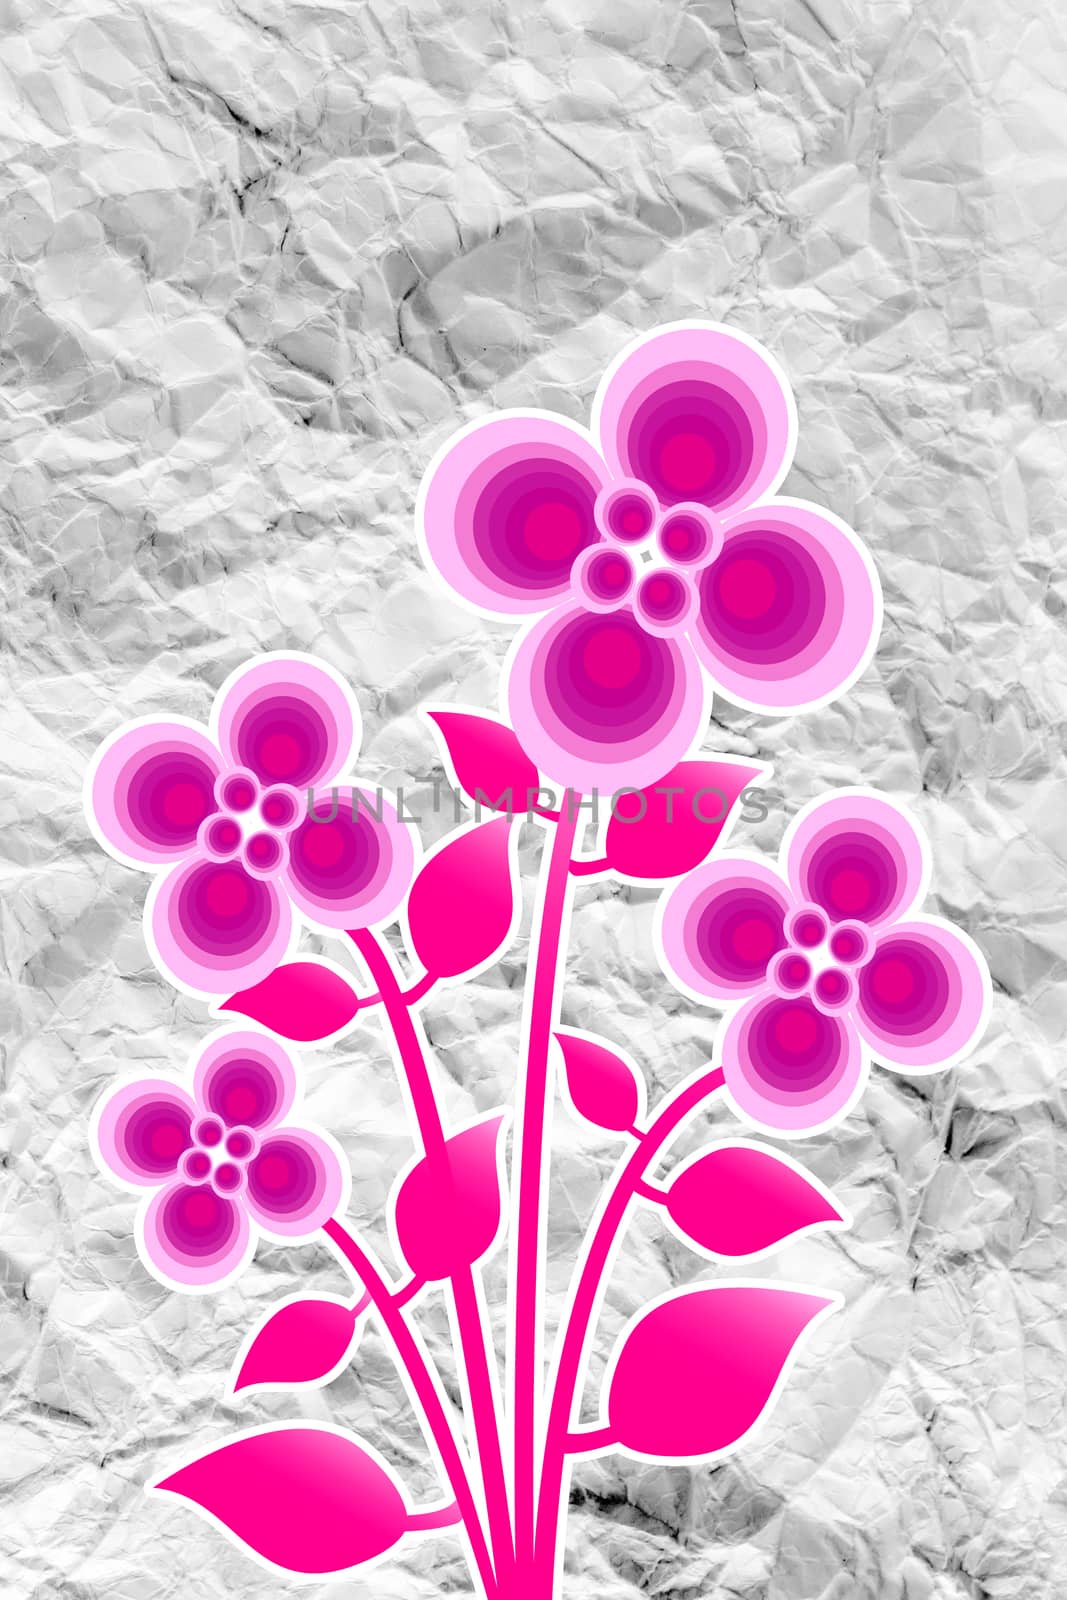 Flowers design on crumpled paper by kiddaikiddee